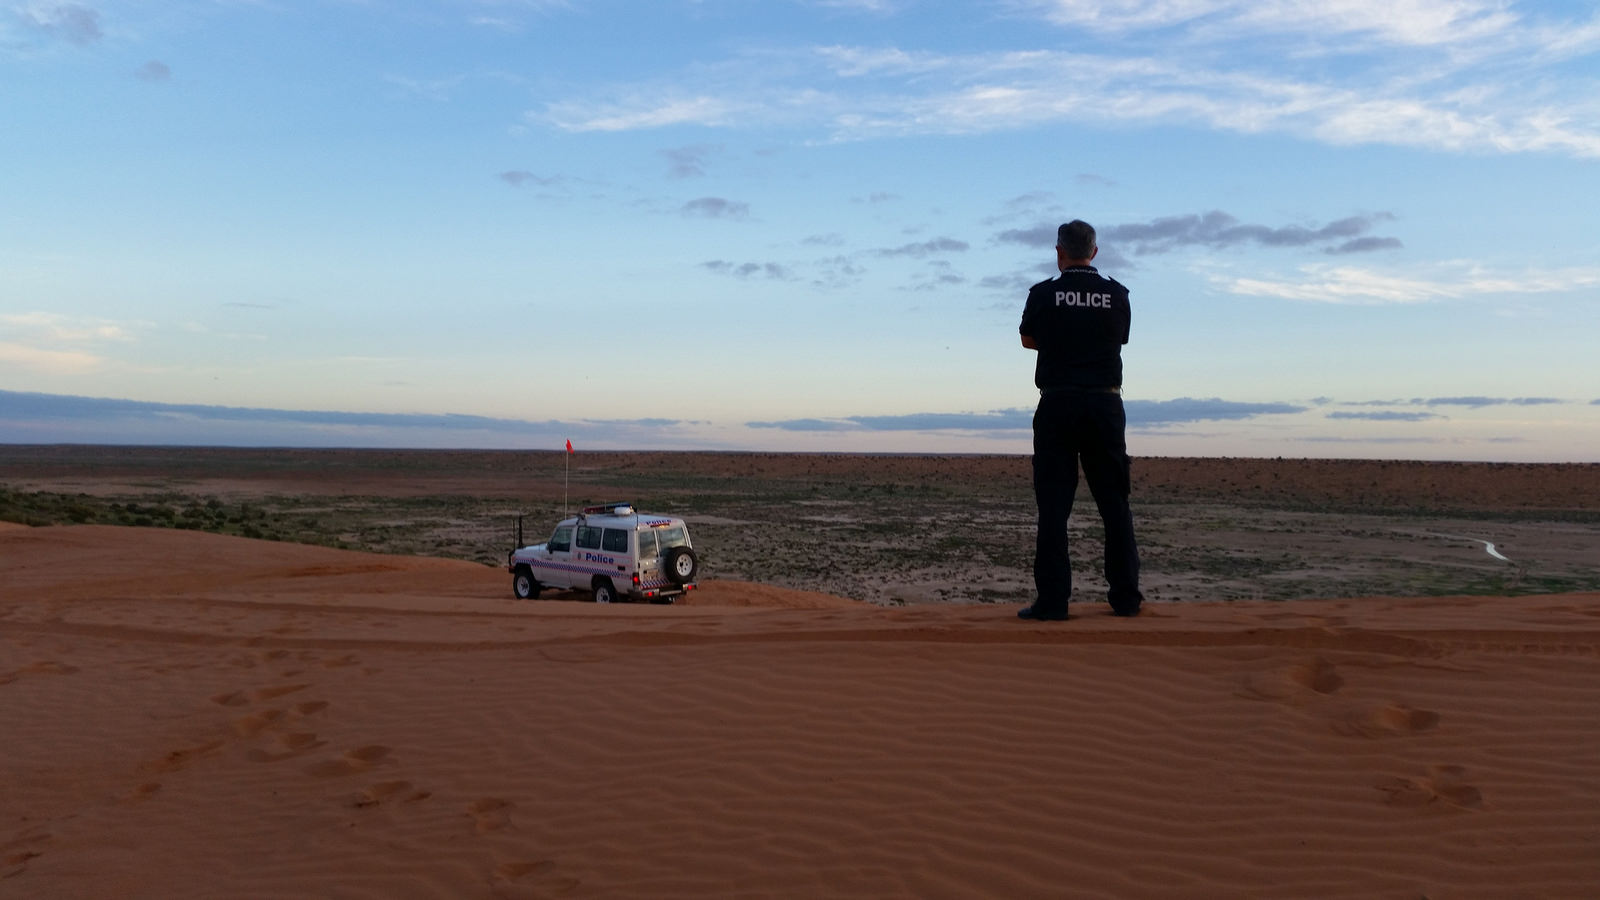 Officer overlooking the desert